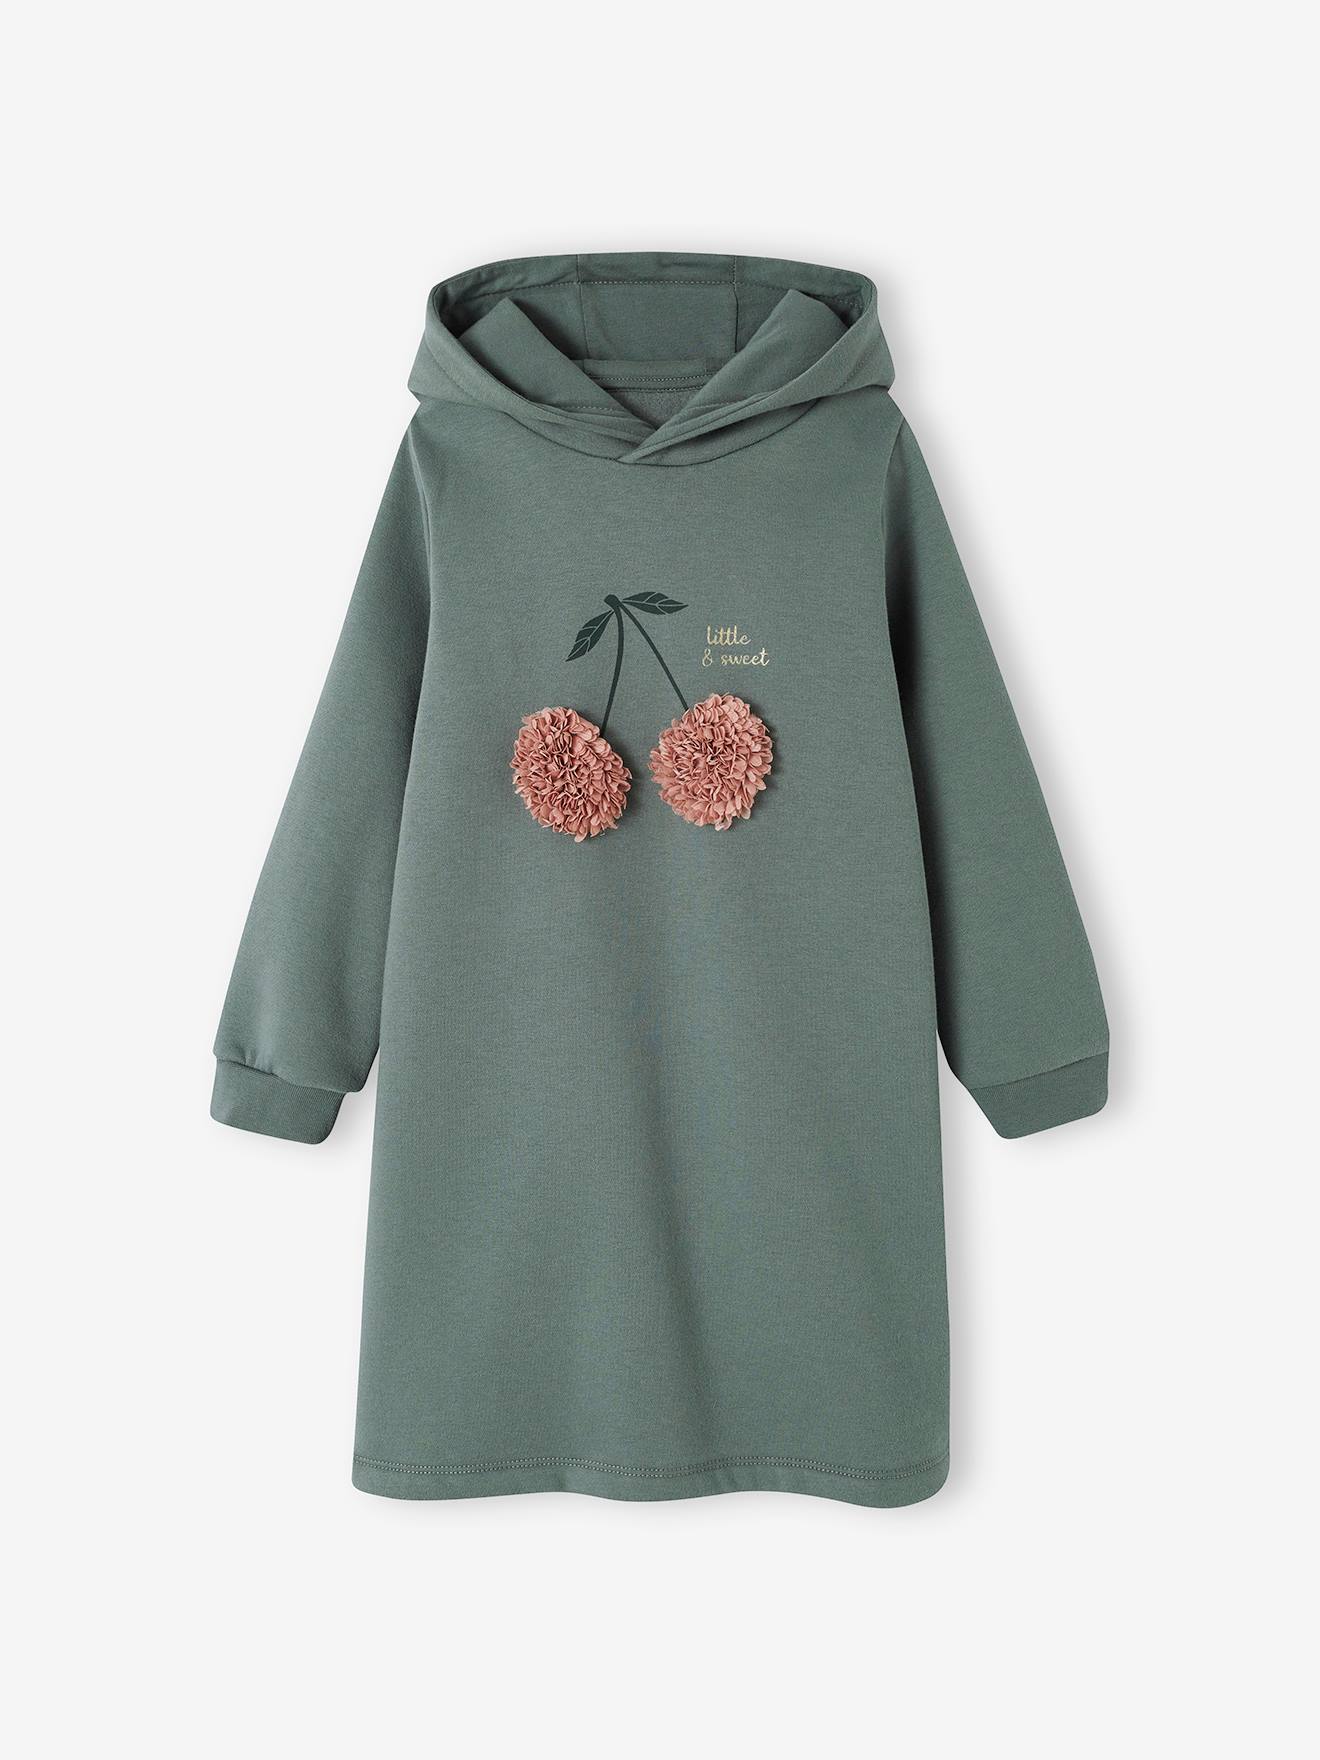 Amazon.com: L.O.L. Surprise! Girls Hoodies Dress Long Sleeve Hooded  Sweatshirt Sweatpants Girls Clothes: Clothing, Shoes & Jewelry